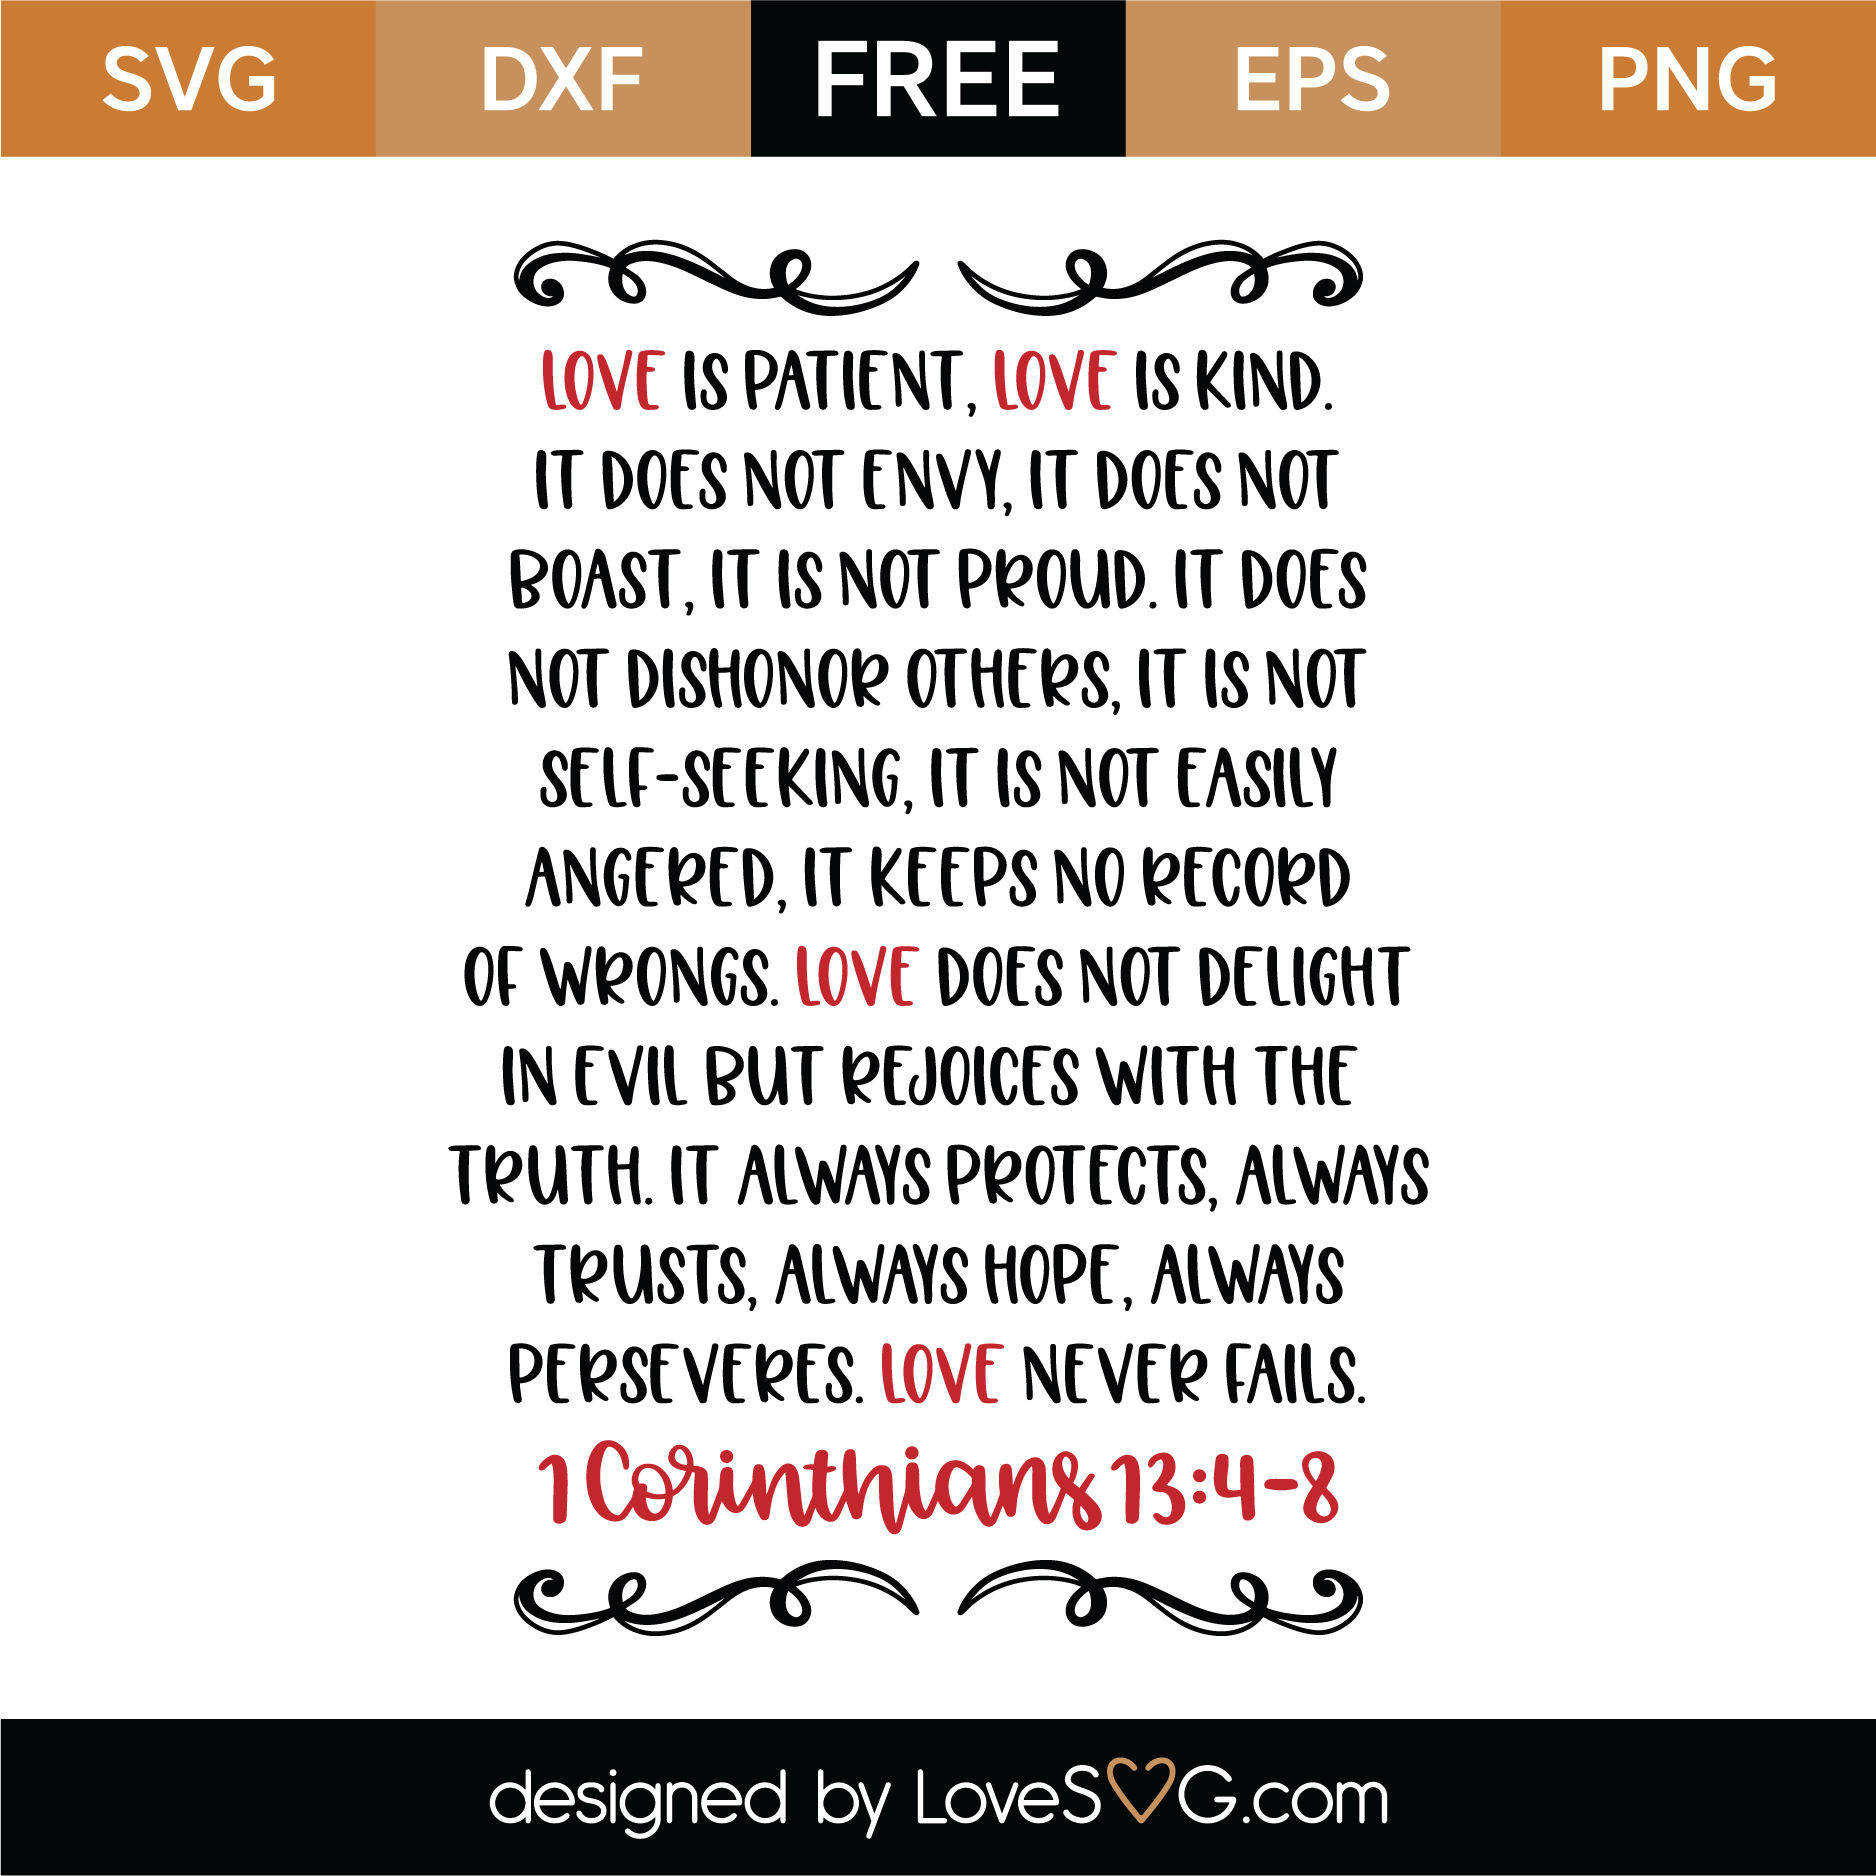 Free Love Is Patient Love Is Kind SVG Cut File | Lovesvg.com